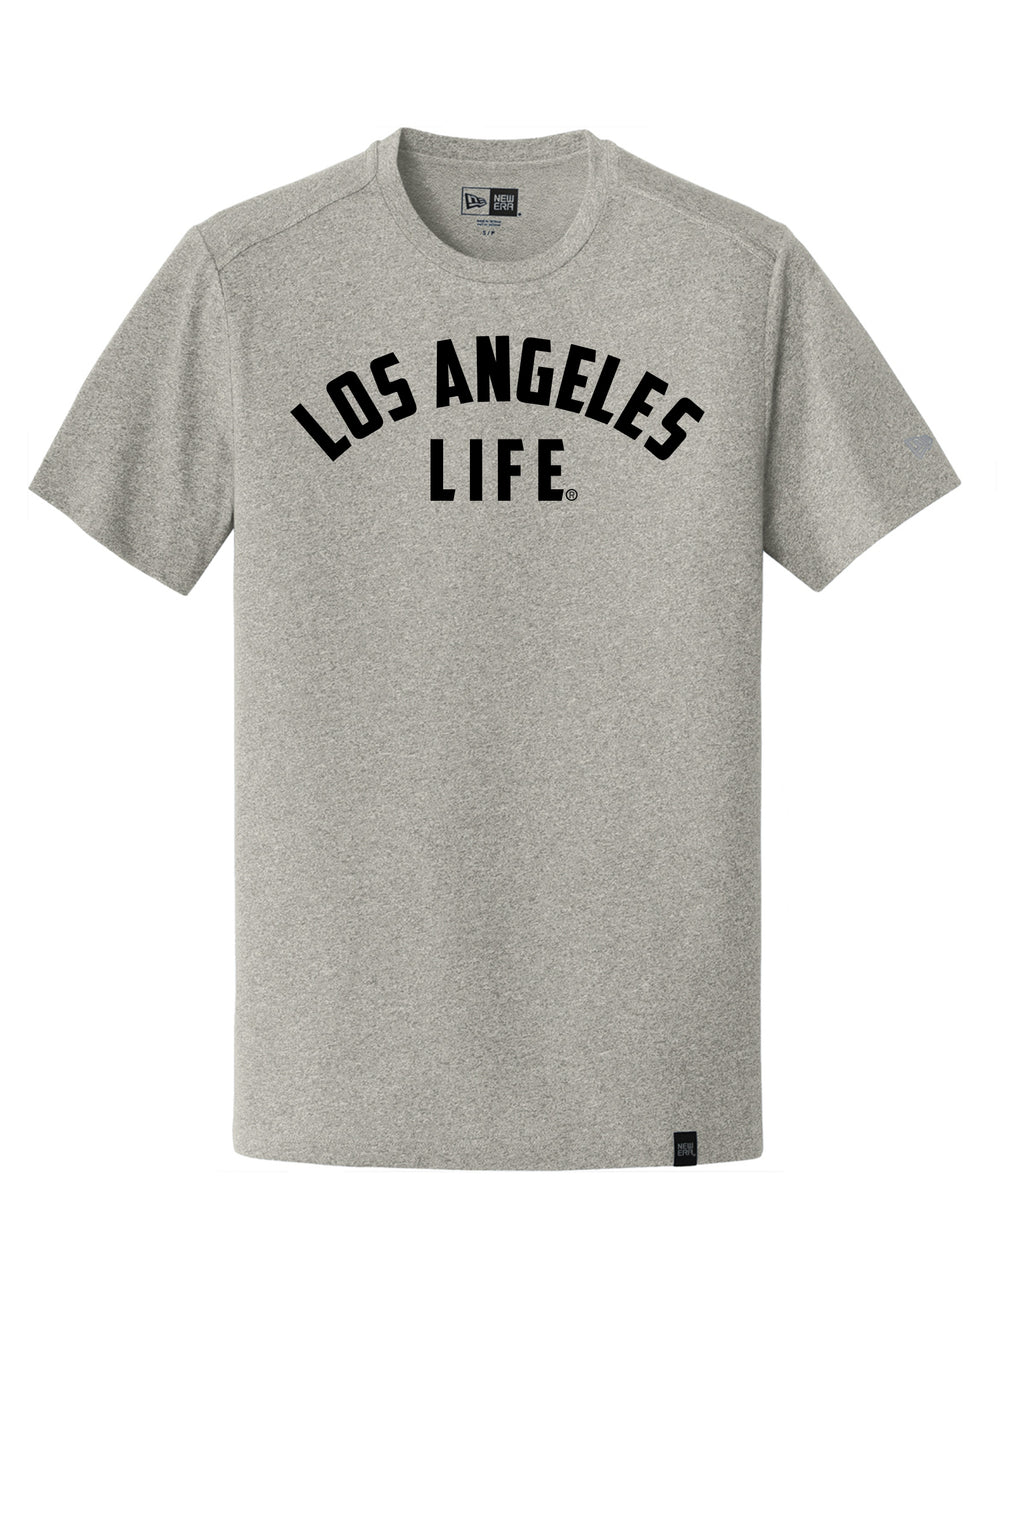 LOS ANGELES LIFE T-SHIRT